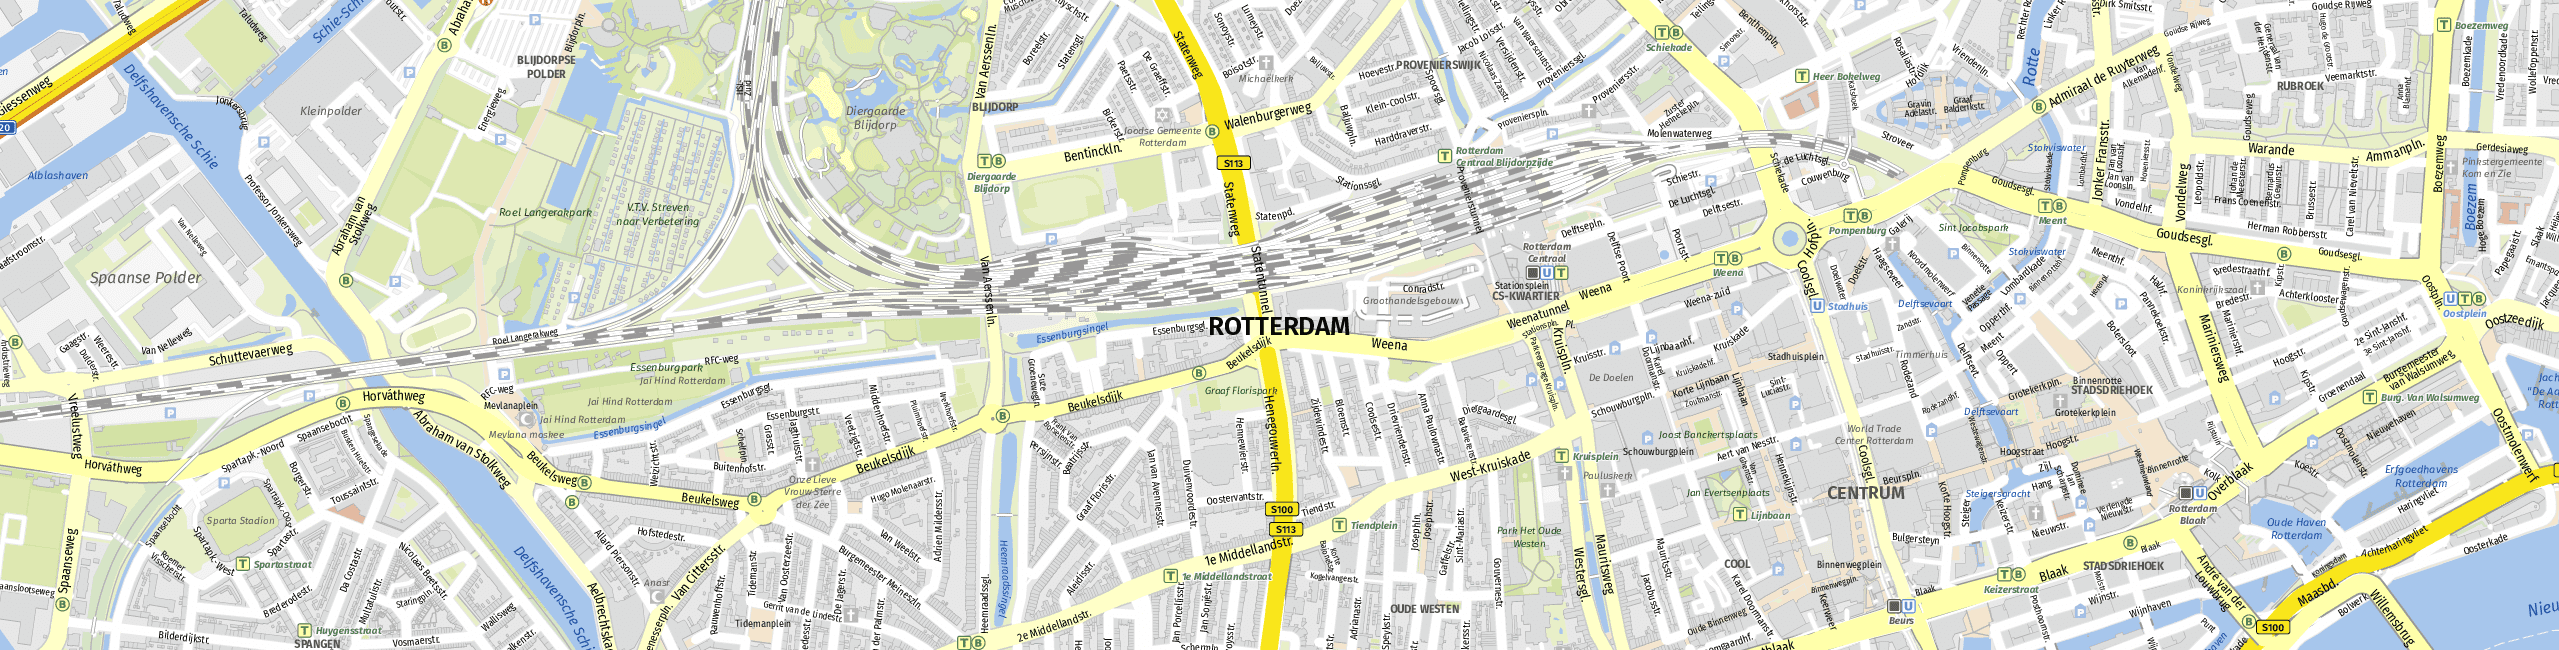 Stadtplan Rotterdam zum Downloaden.